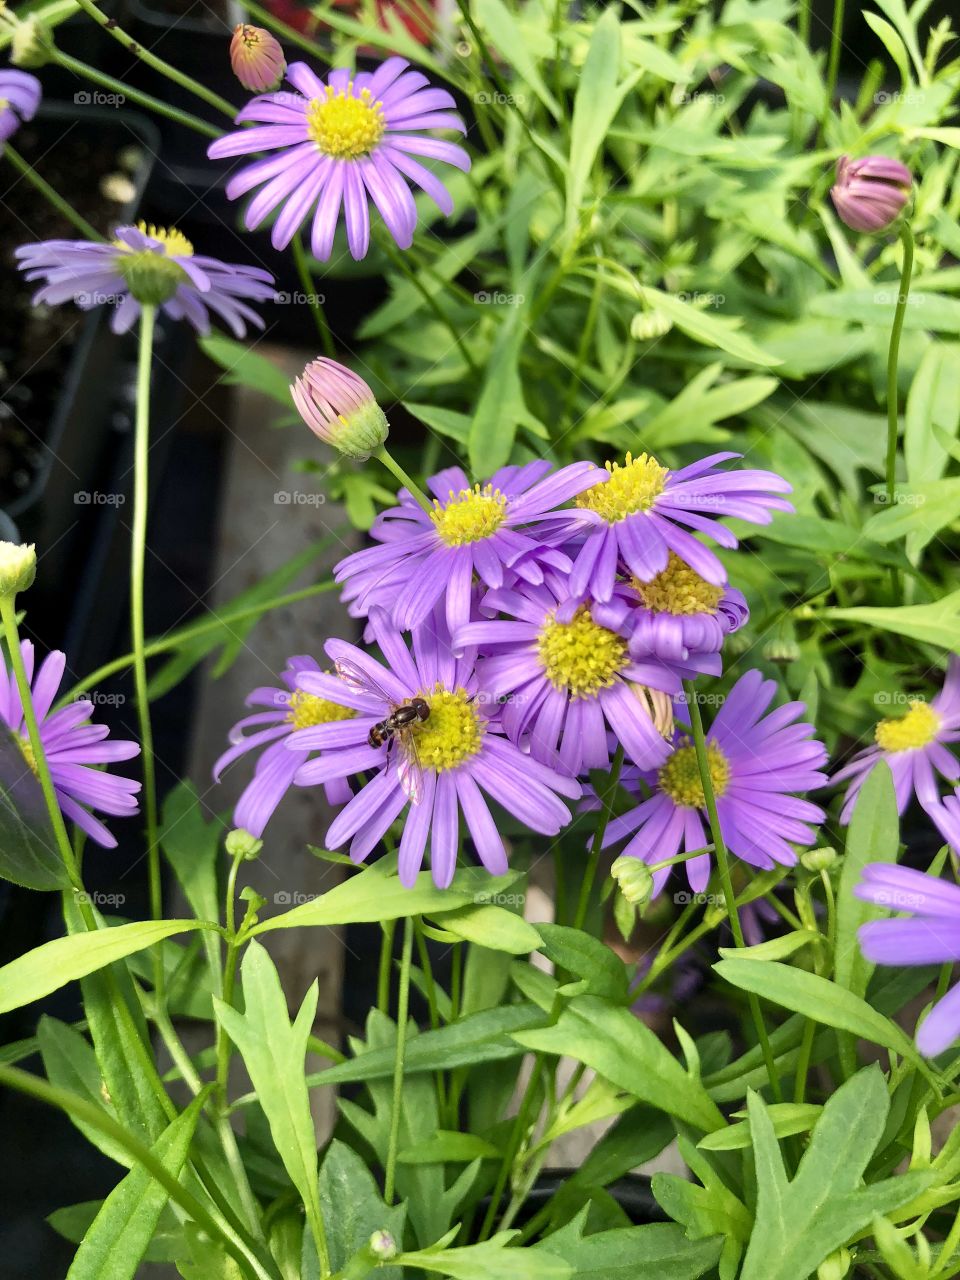 Bee on some purple flowers